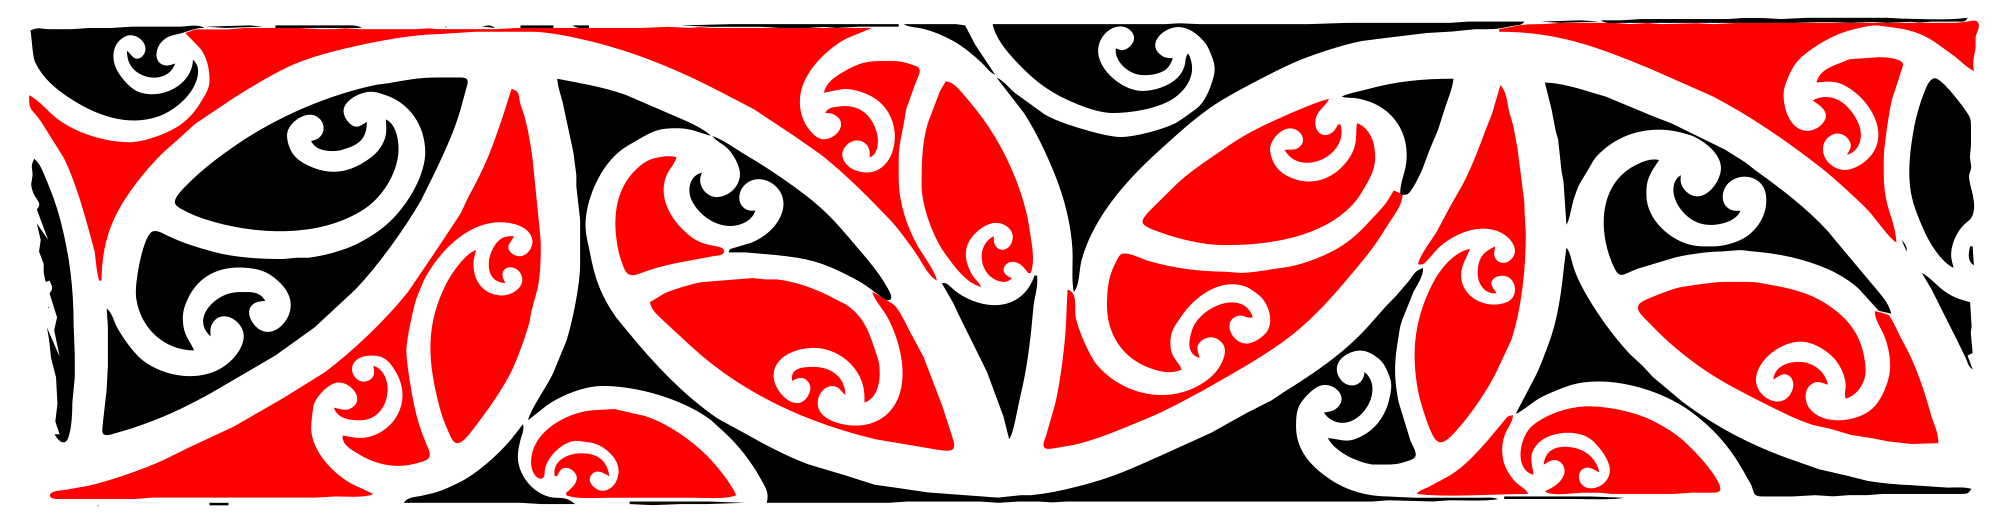 hook clipart maori